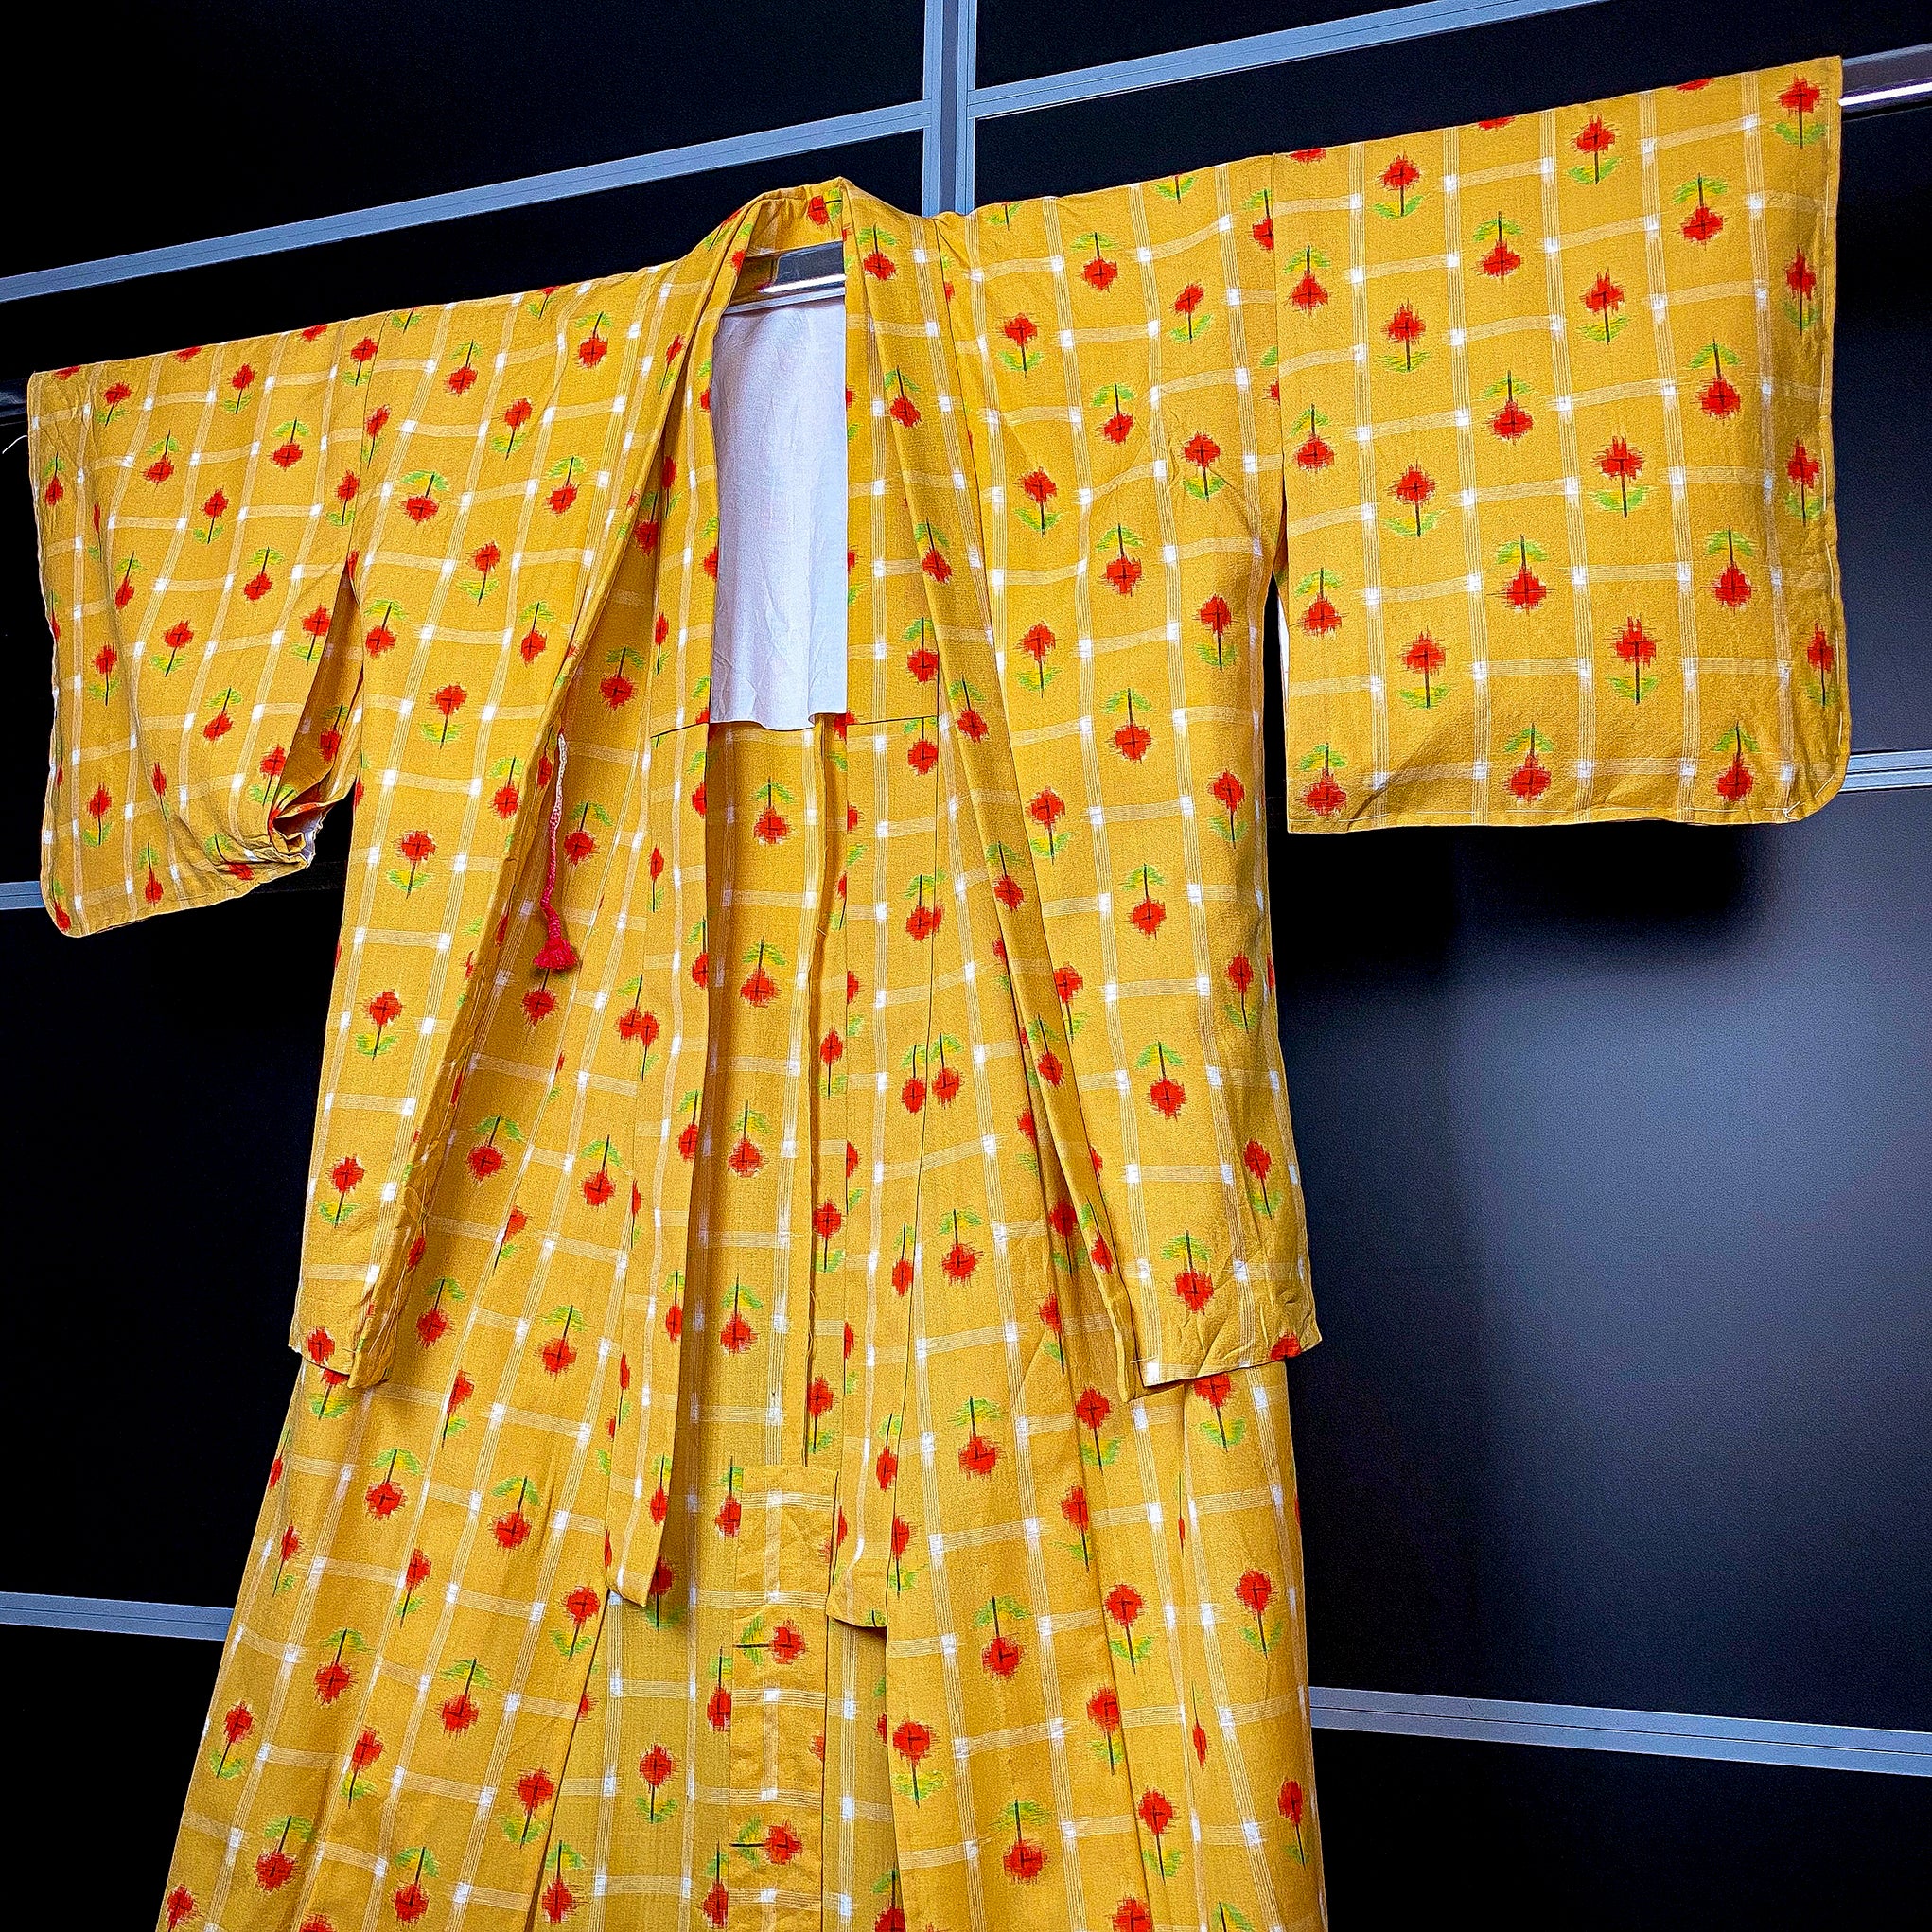 Yellow Kimono Haori Set with Colorful Floral Prints